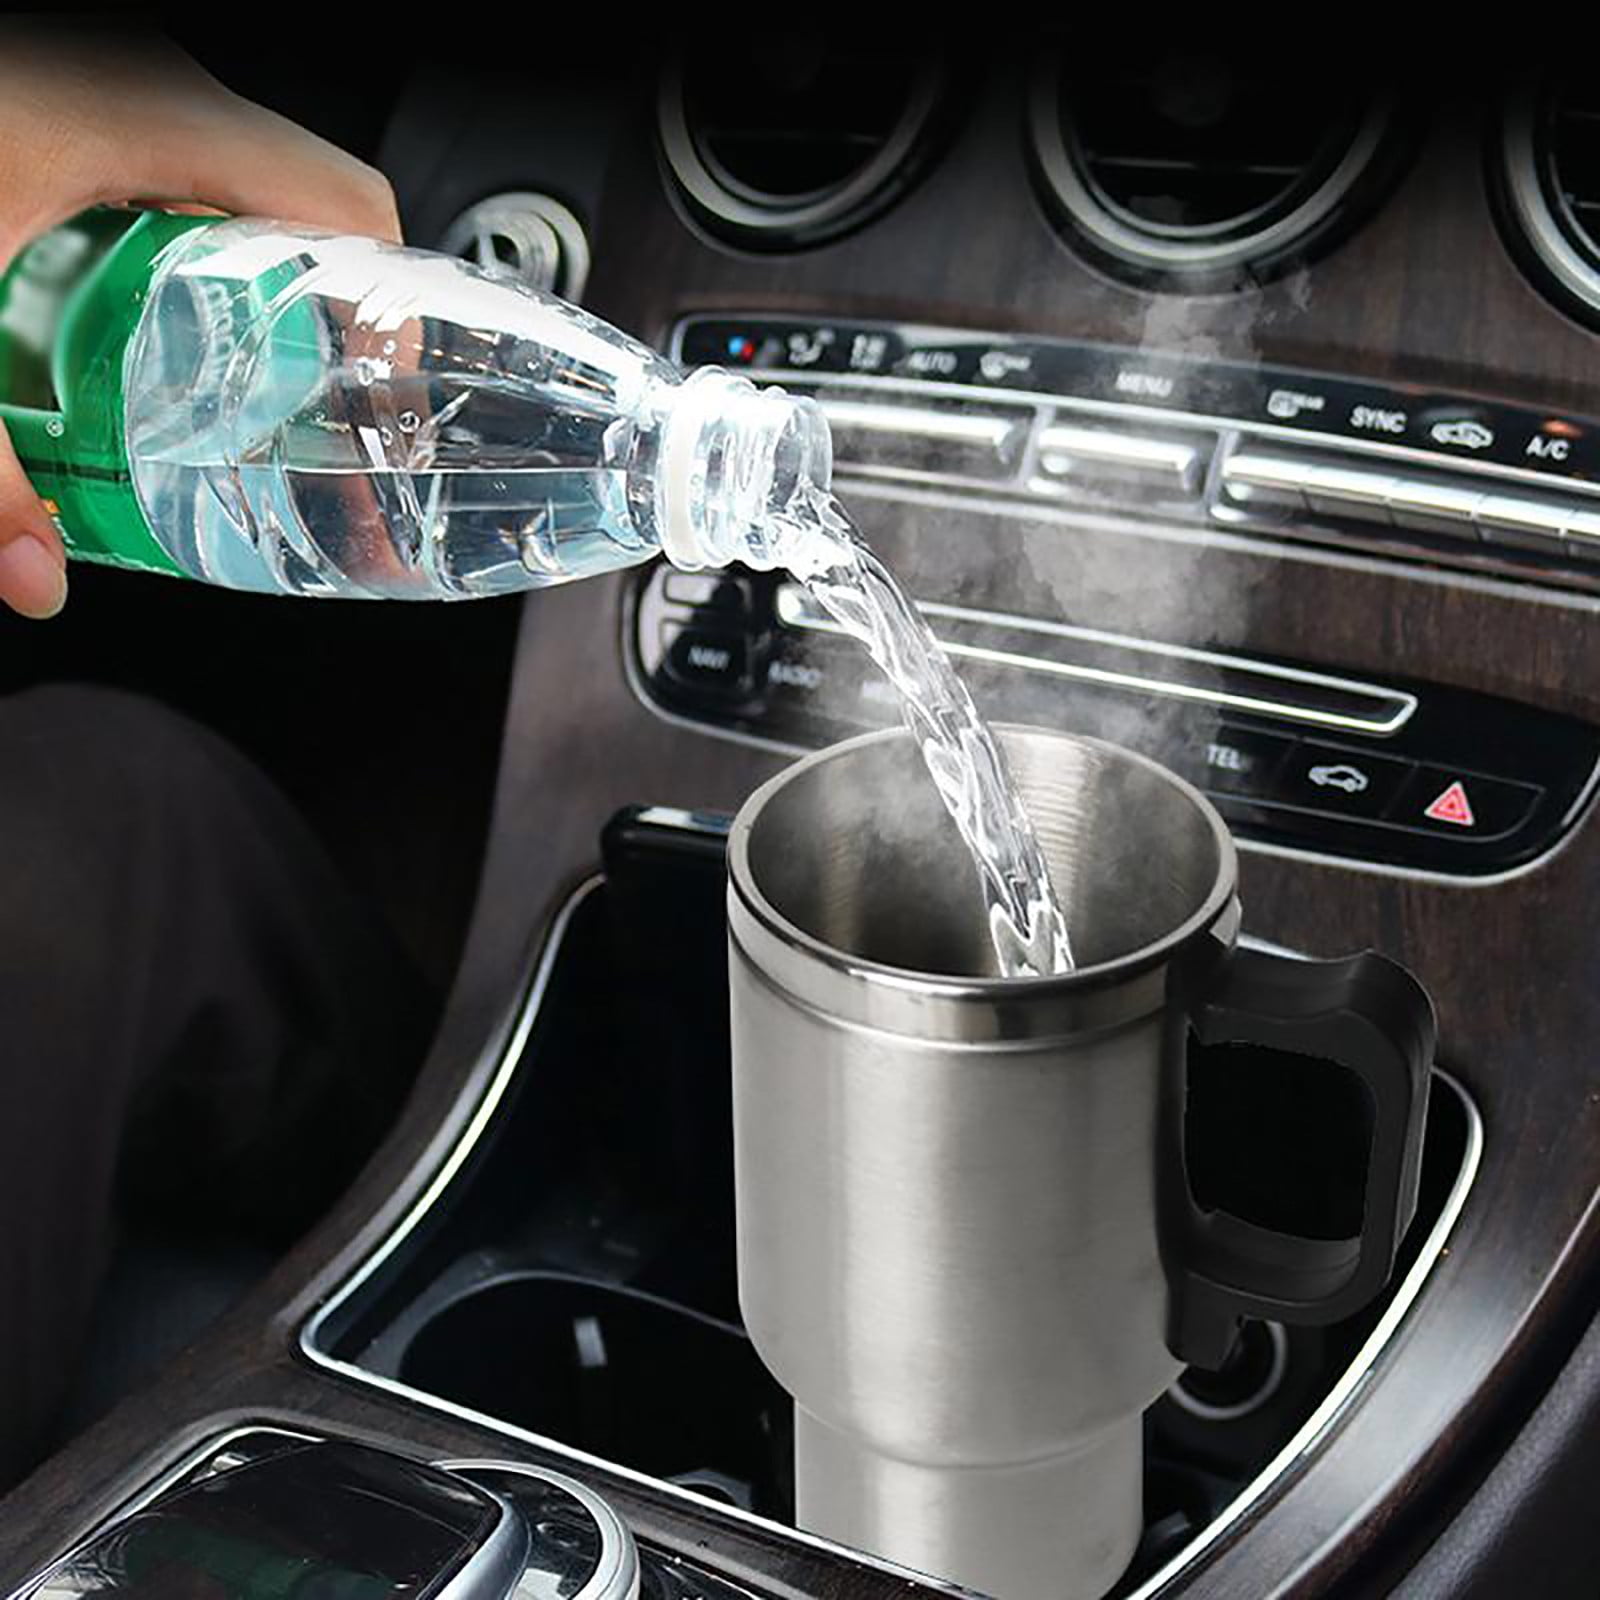 Vehicle heated travel coffee mug, plugs into lighter, 12v, black